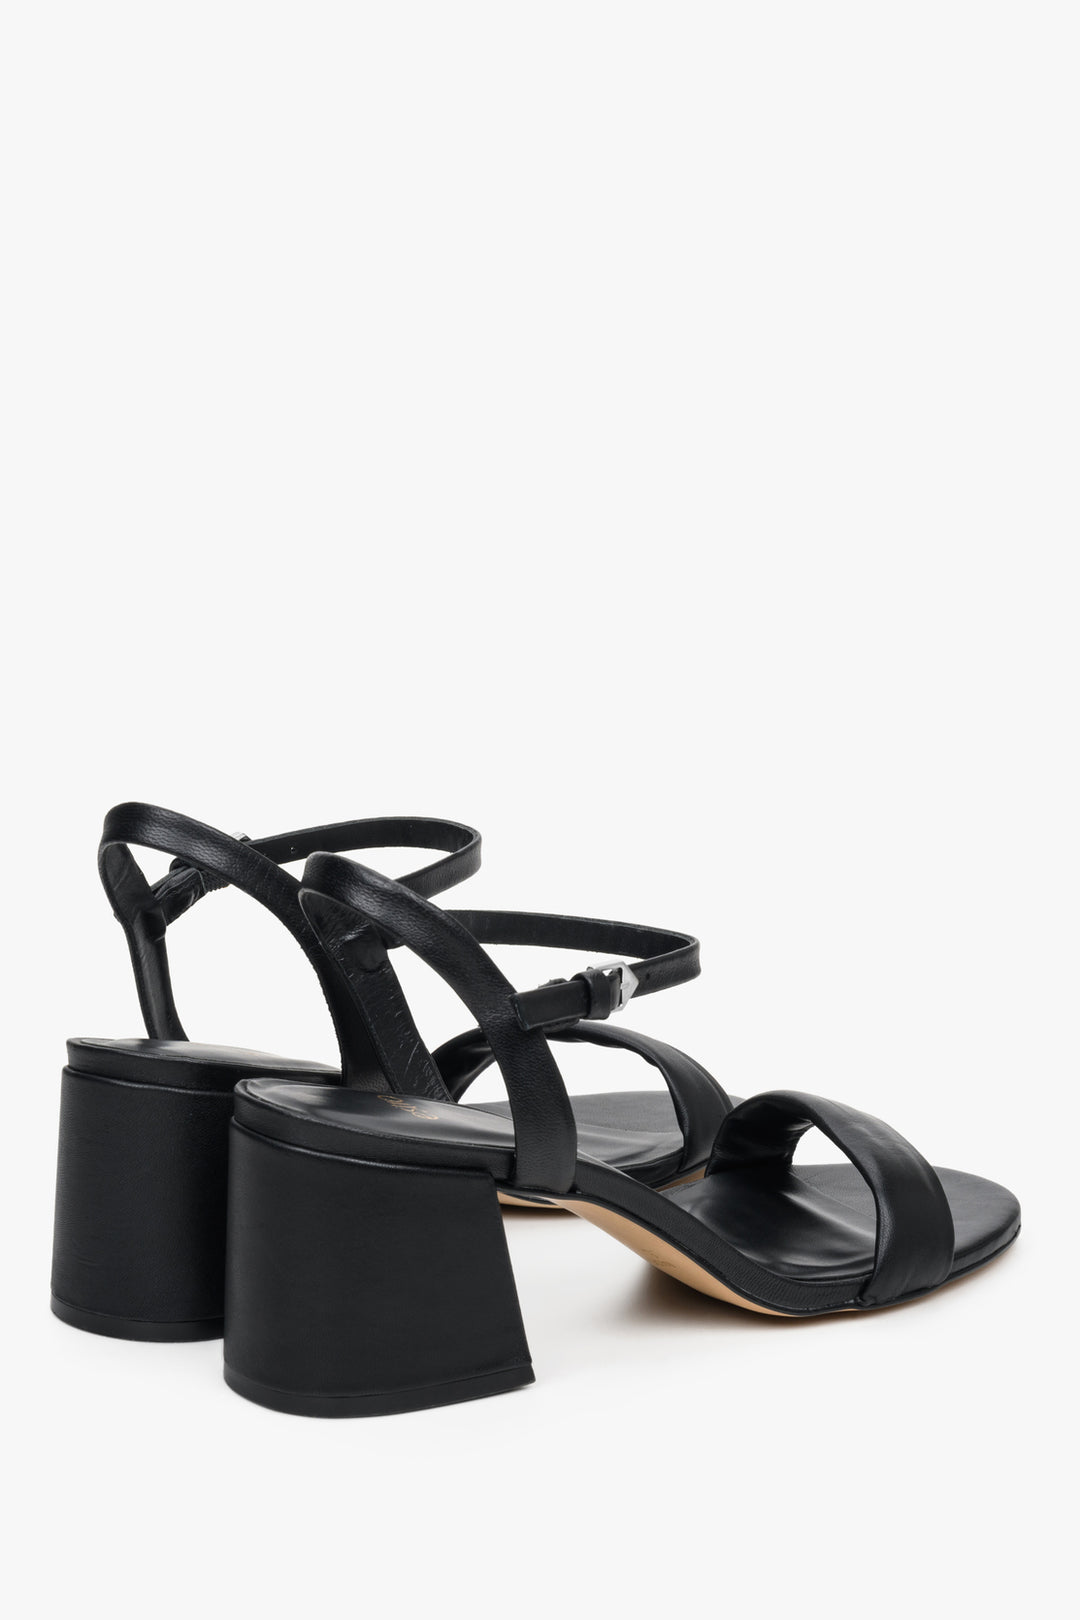 Women's Block Heel Black Sandals made of Genuine Leather Estro ER00112425